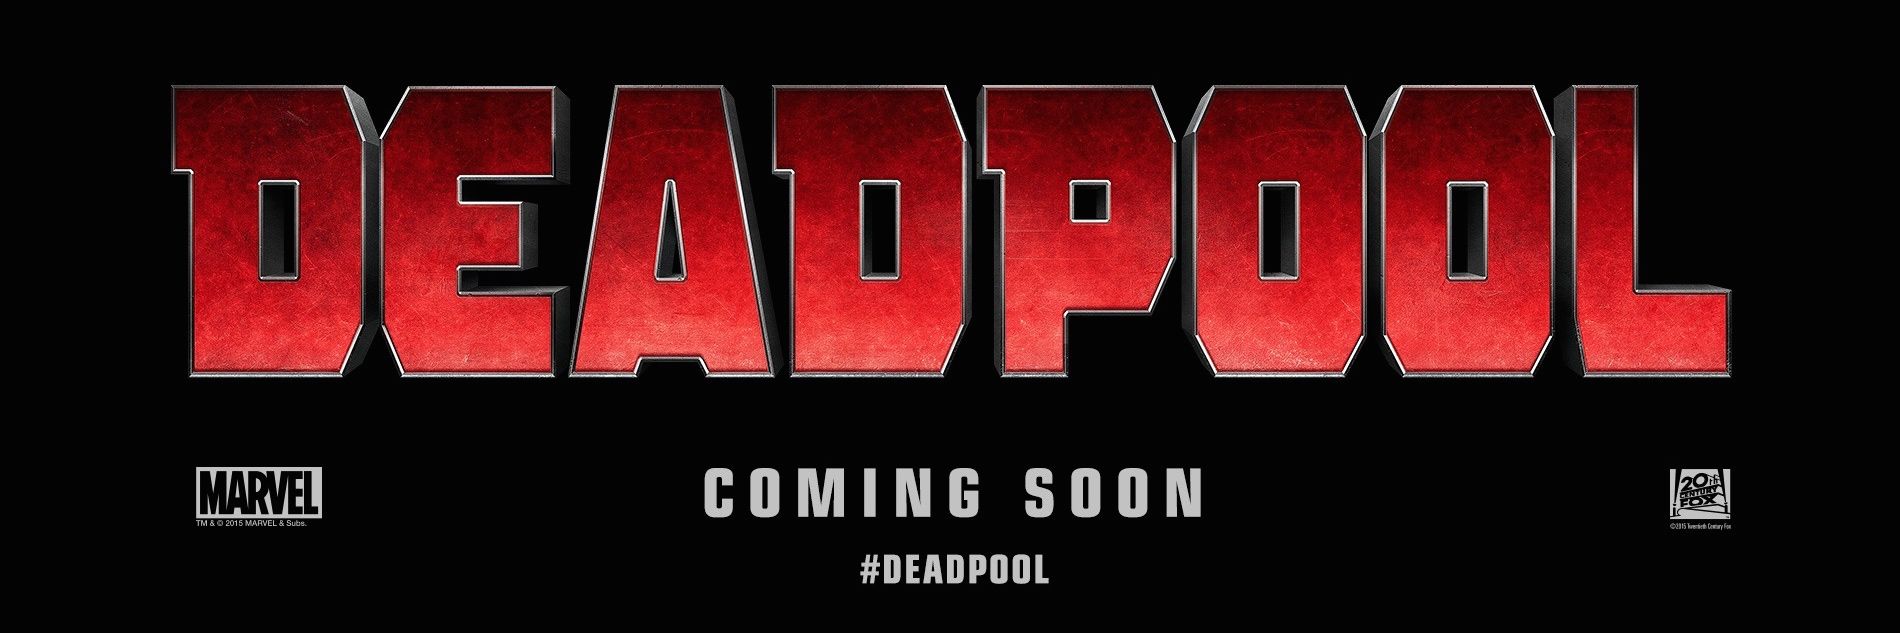 deadpool-logo-slice